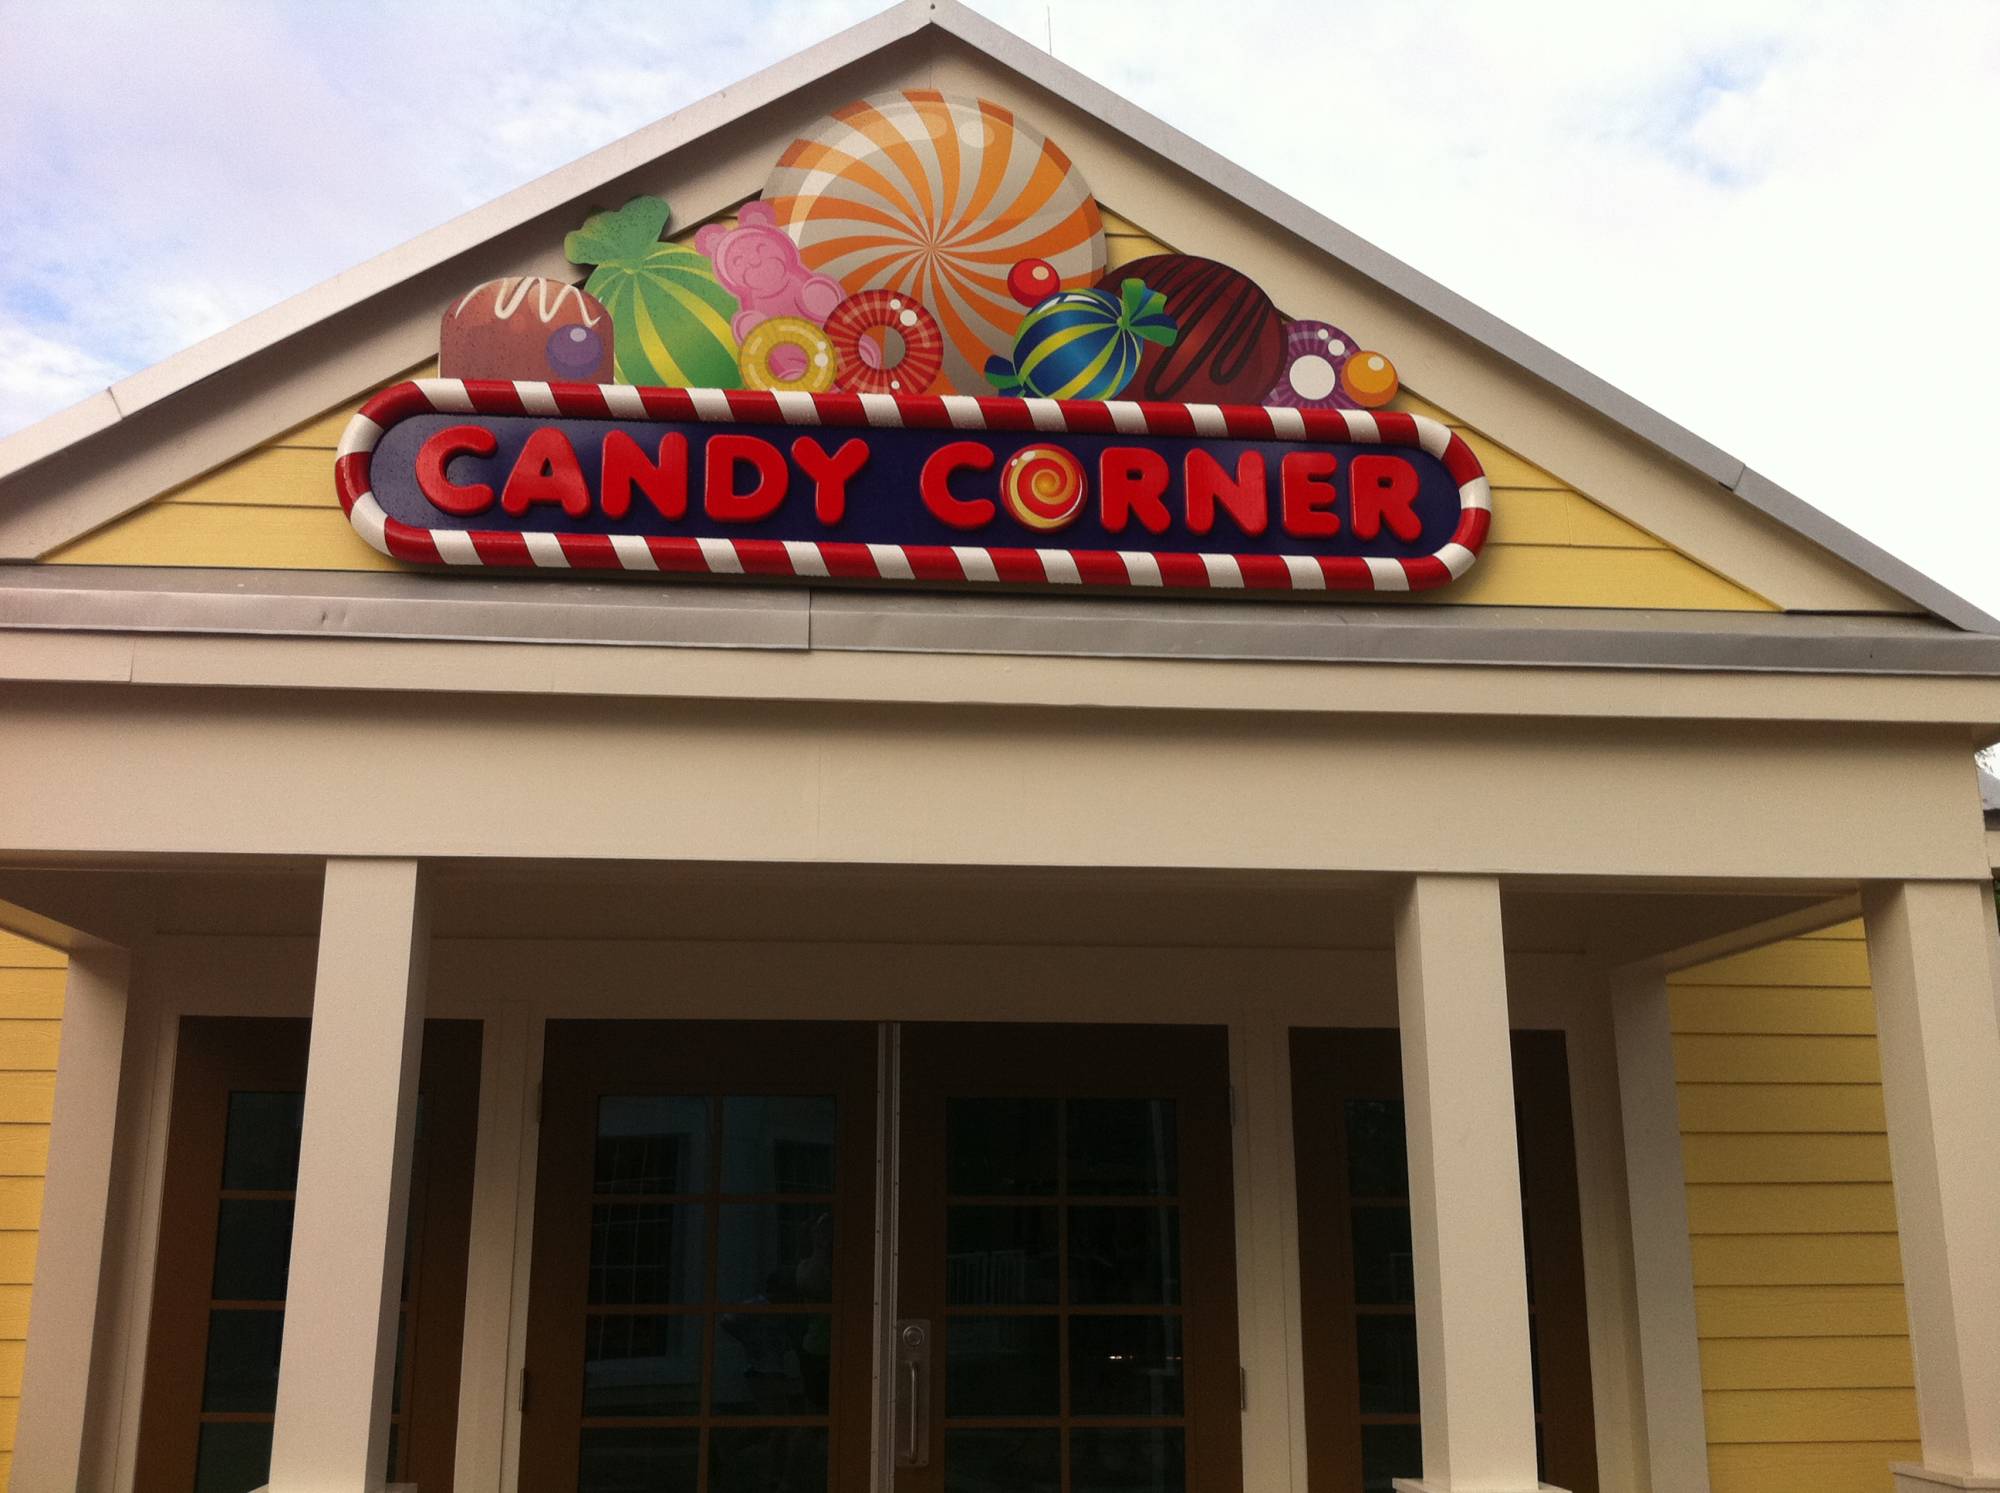 Candy Corner at LEGOLAND Florida